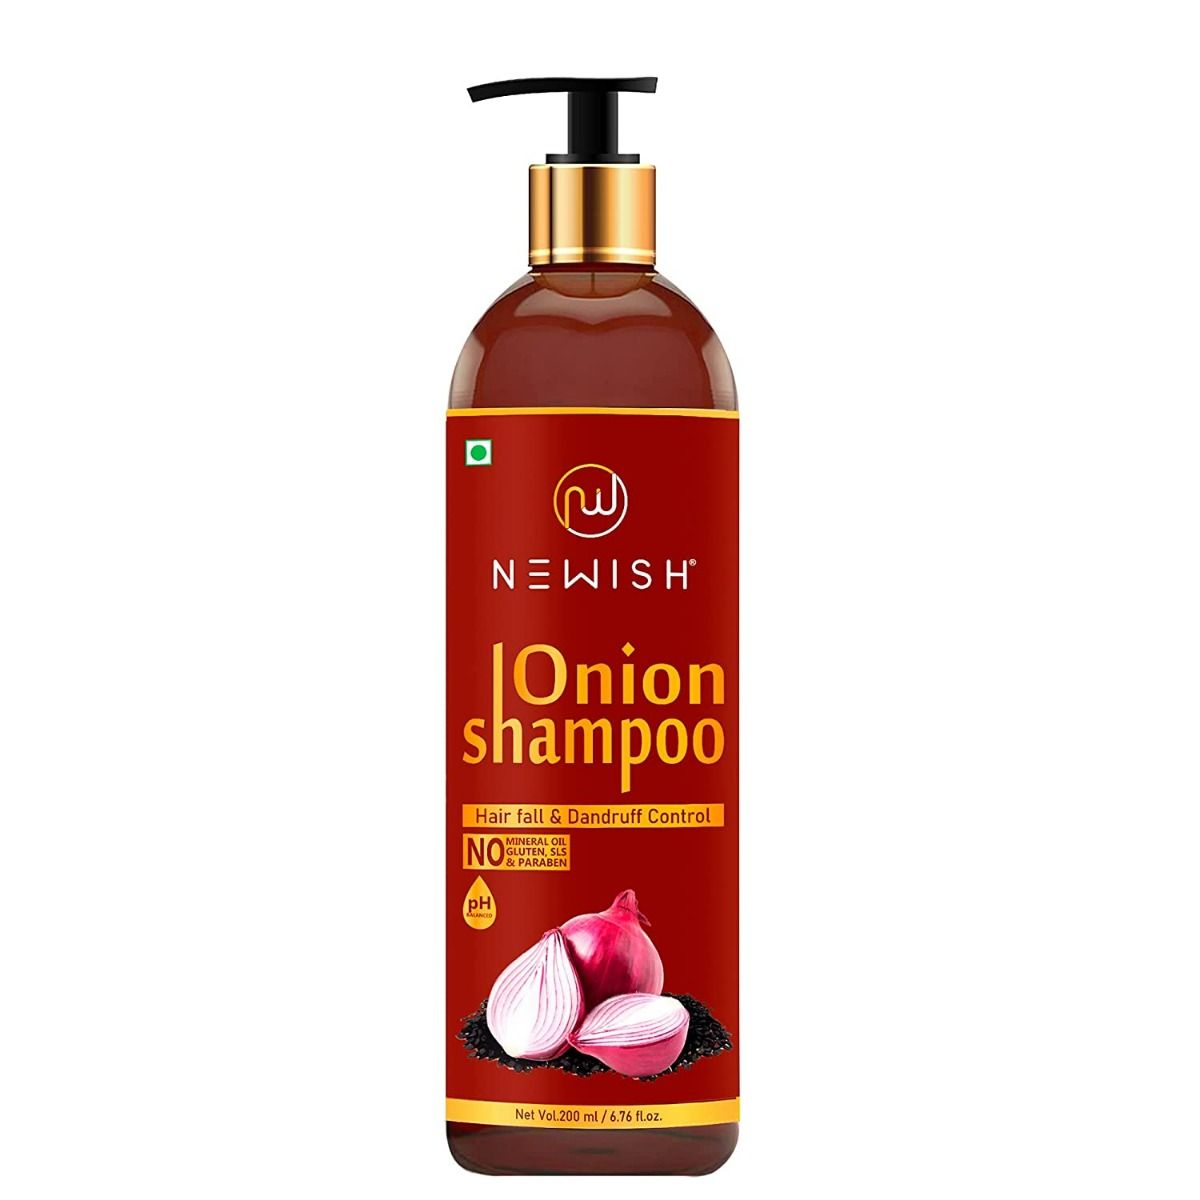 Newish Red Onion Shampoo, 200 ml, Pack of 1 